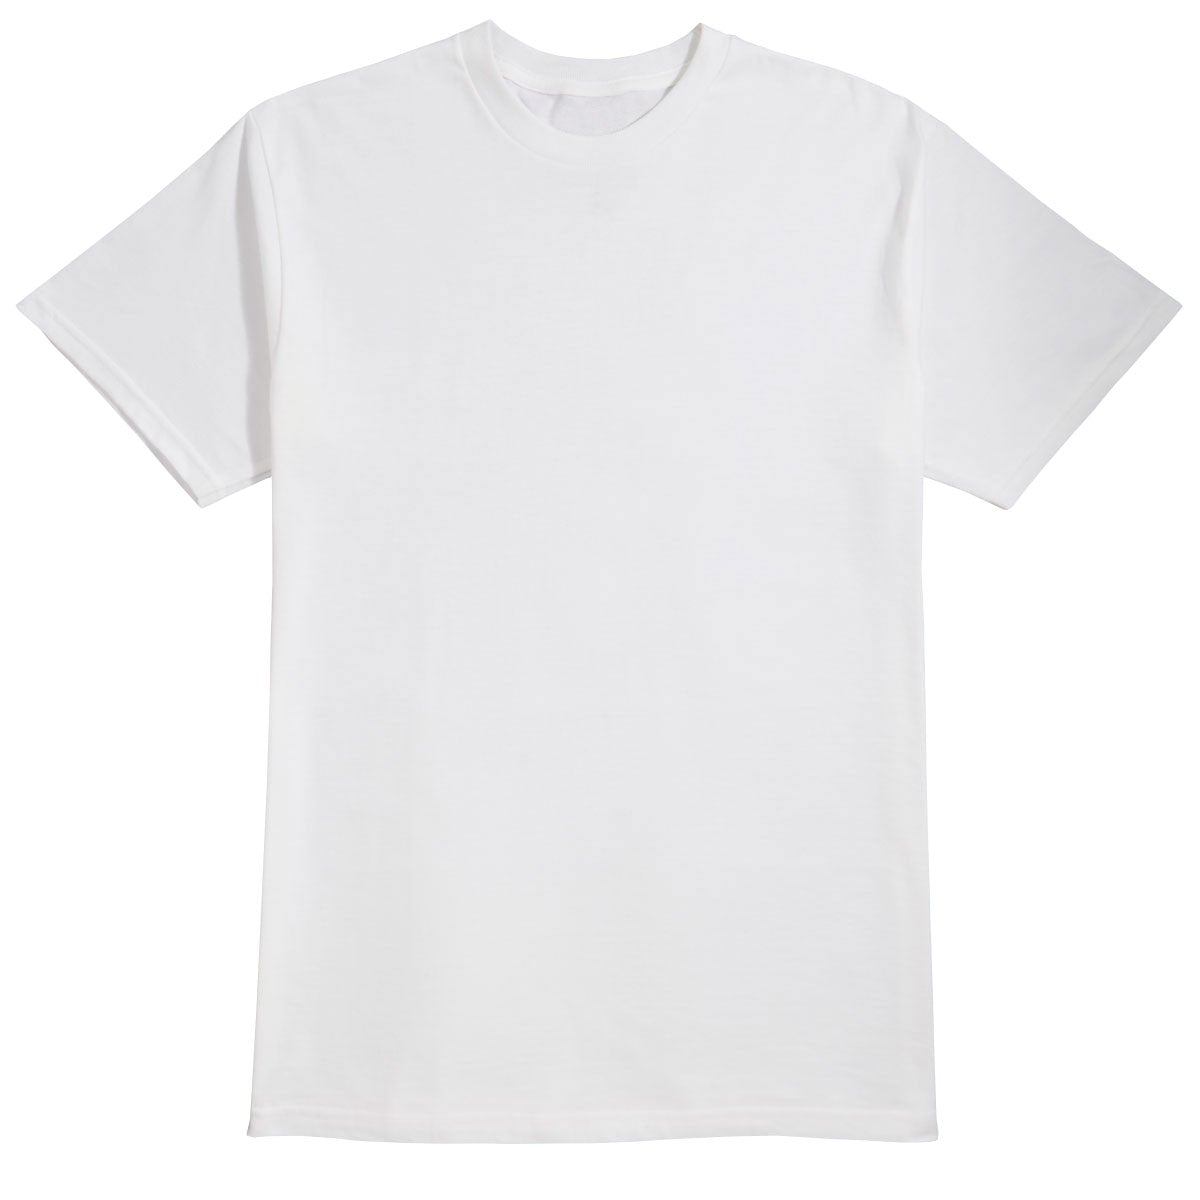 Converse Flash Sheet T-Shirt image 3